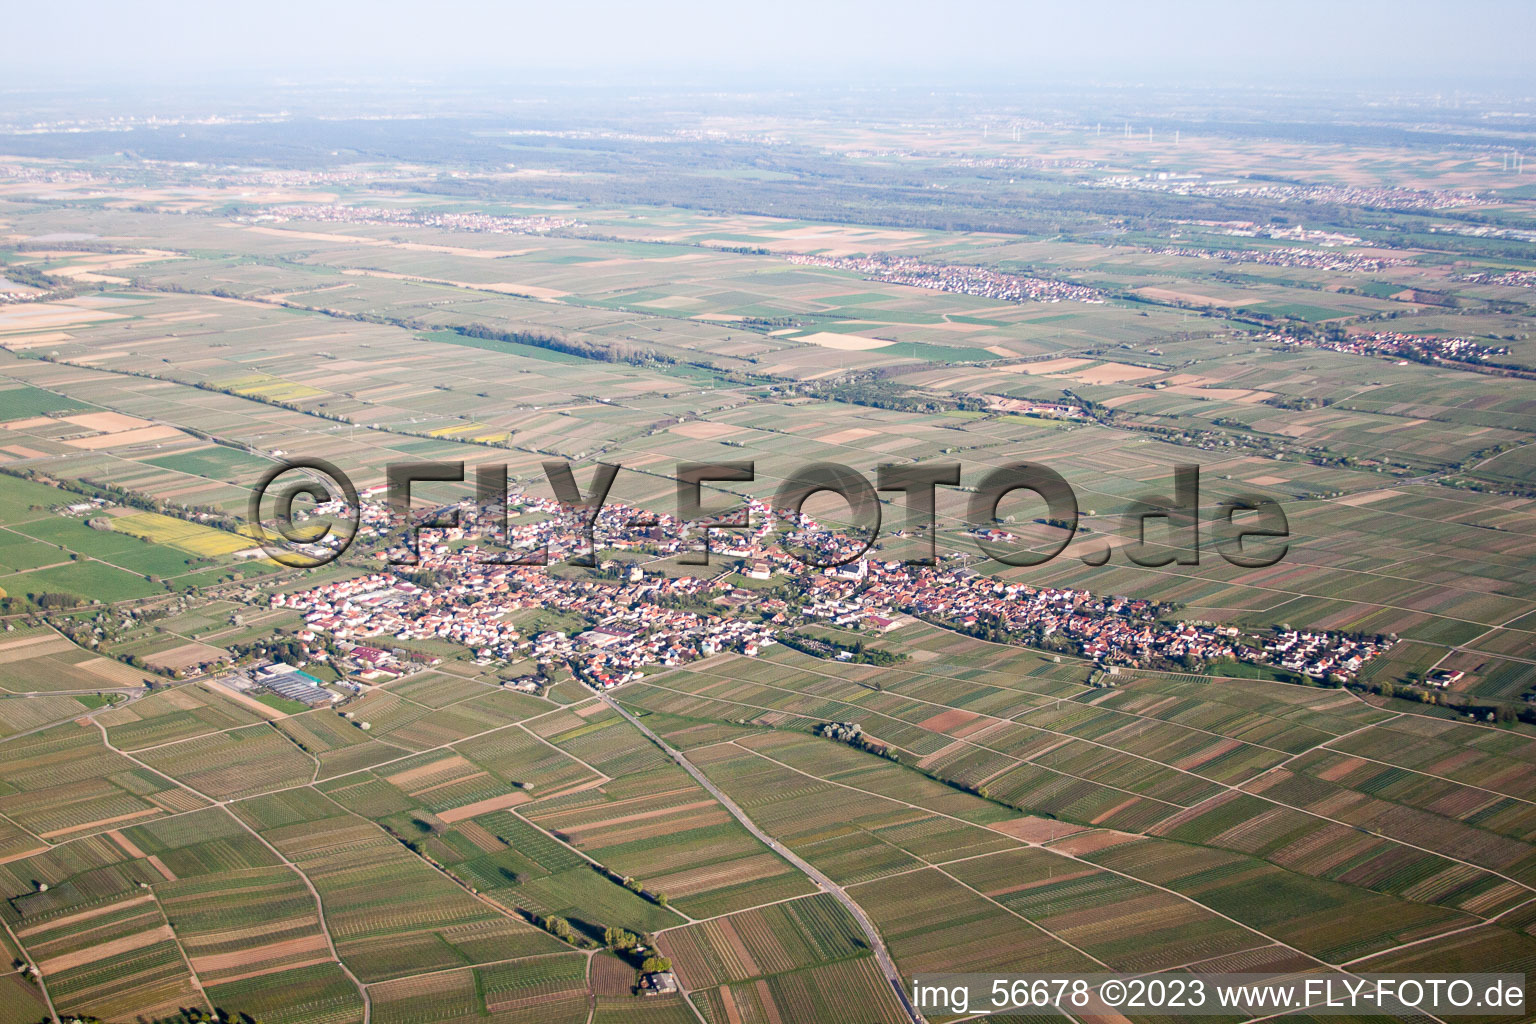 Aerial view of Edenkoben in the state Rhineland-Palatinate, Germany